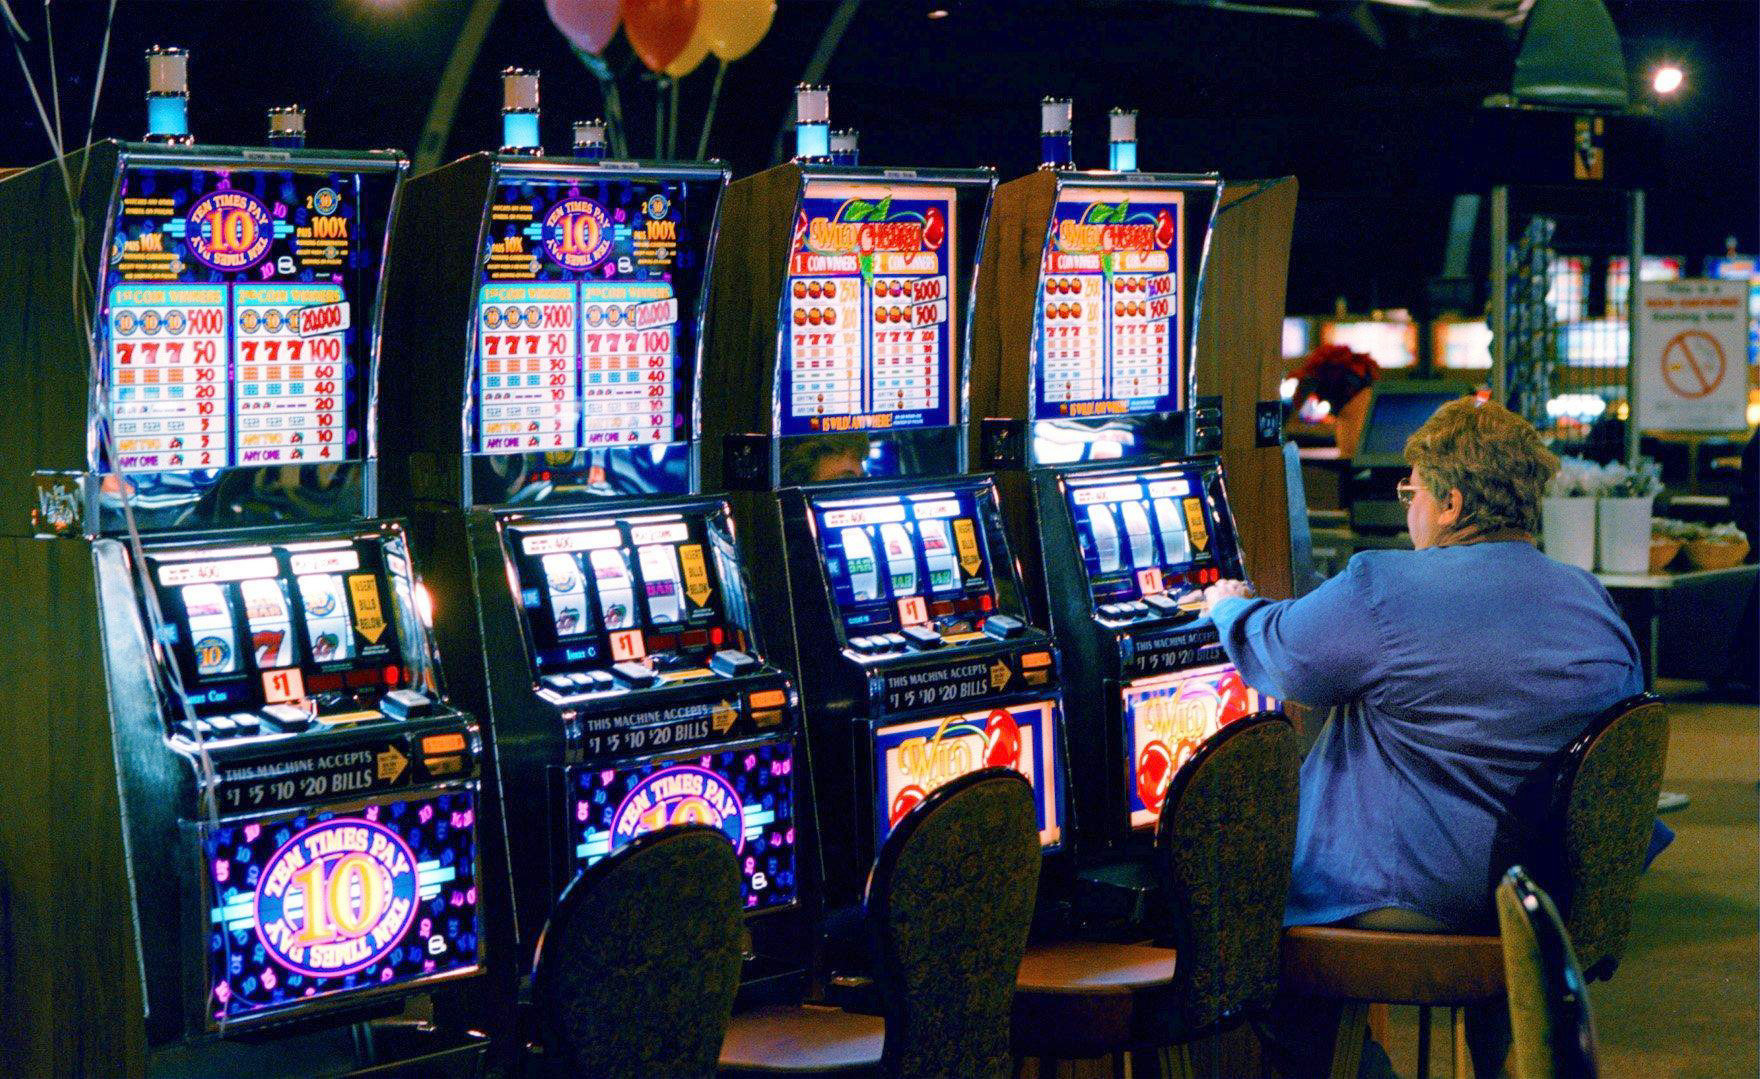 Free casino money offers of the online casinos